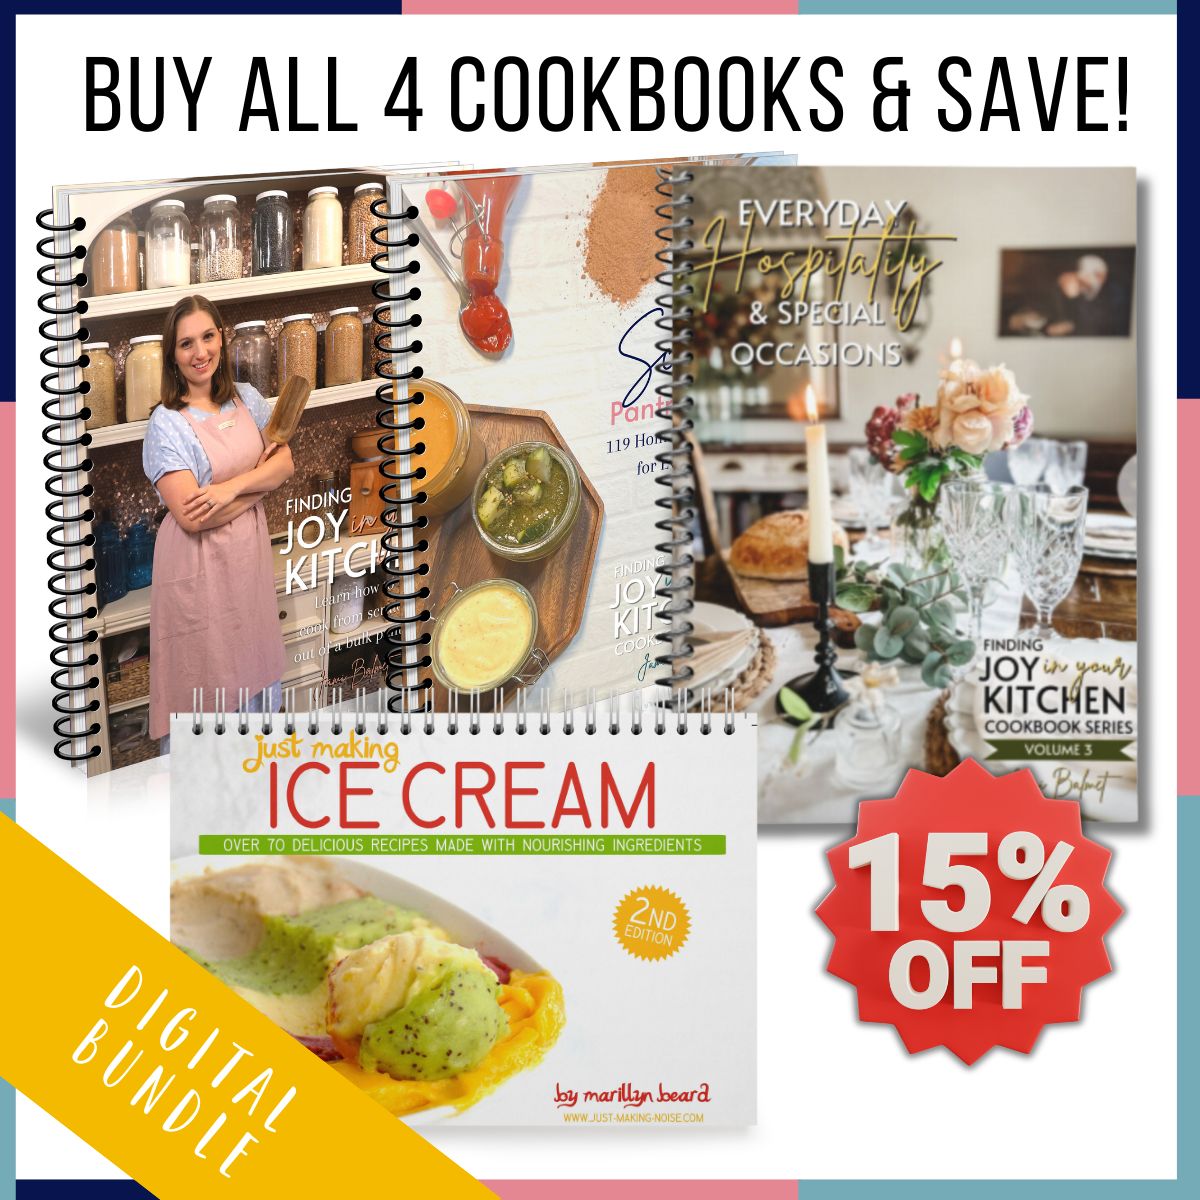 Buy all 4 cookbooks & save 15%! PRINT